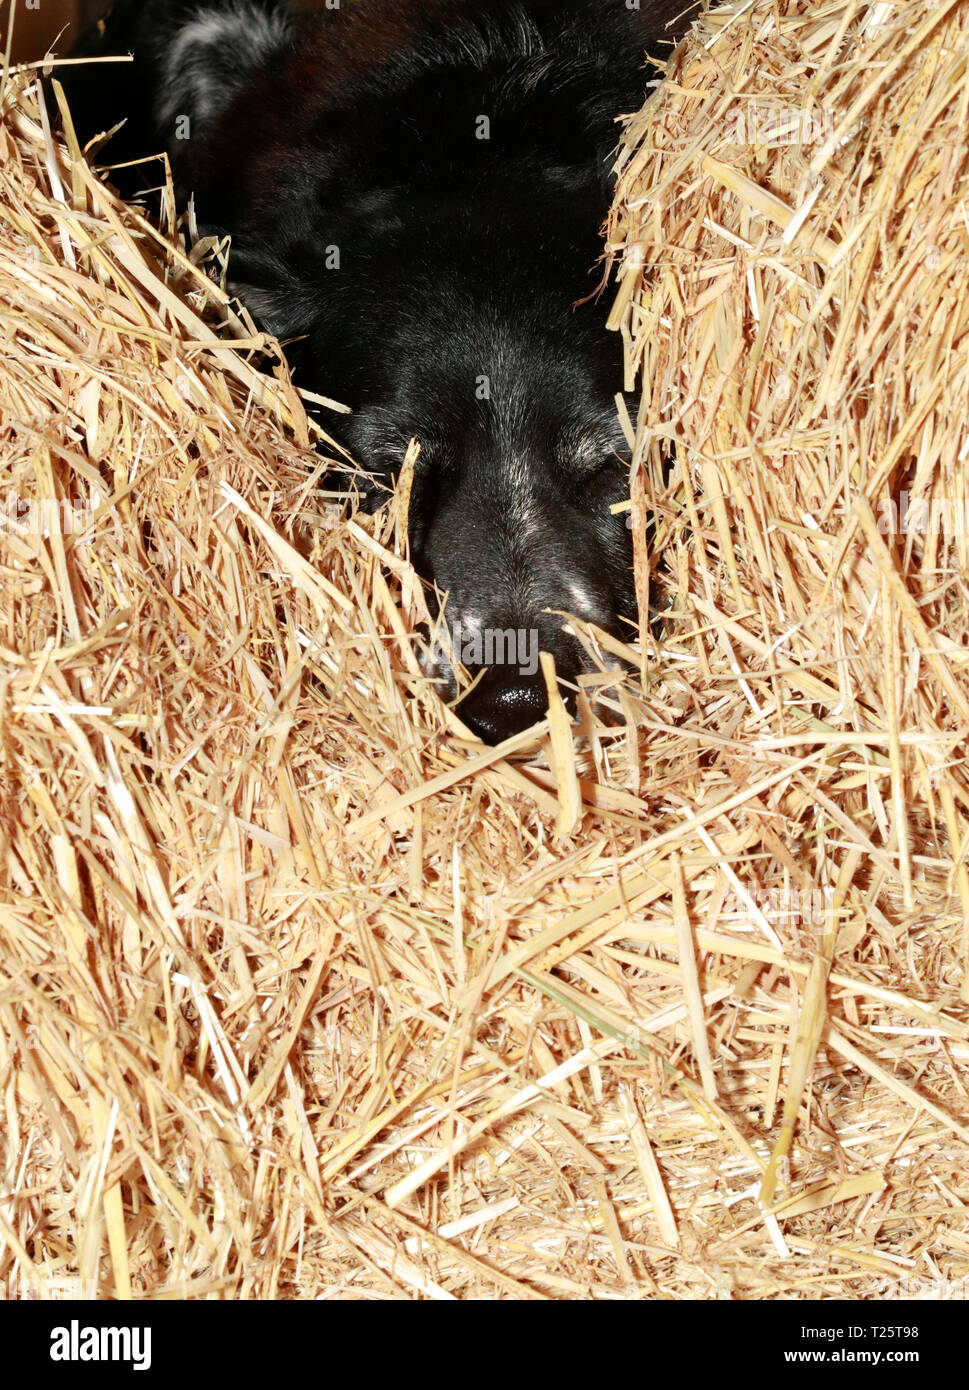 Black dog sleeping / hiding in a barn. France Stock Photo